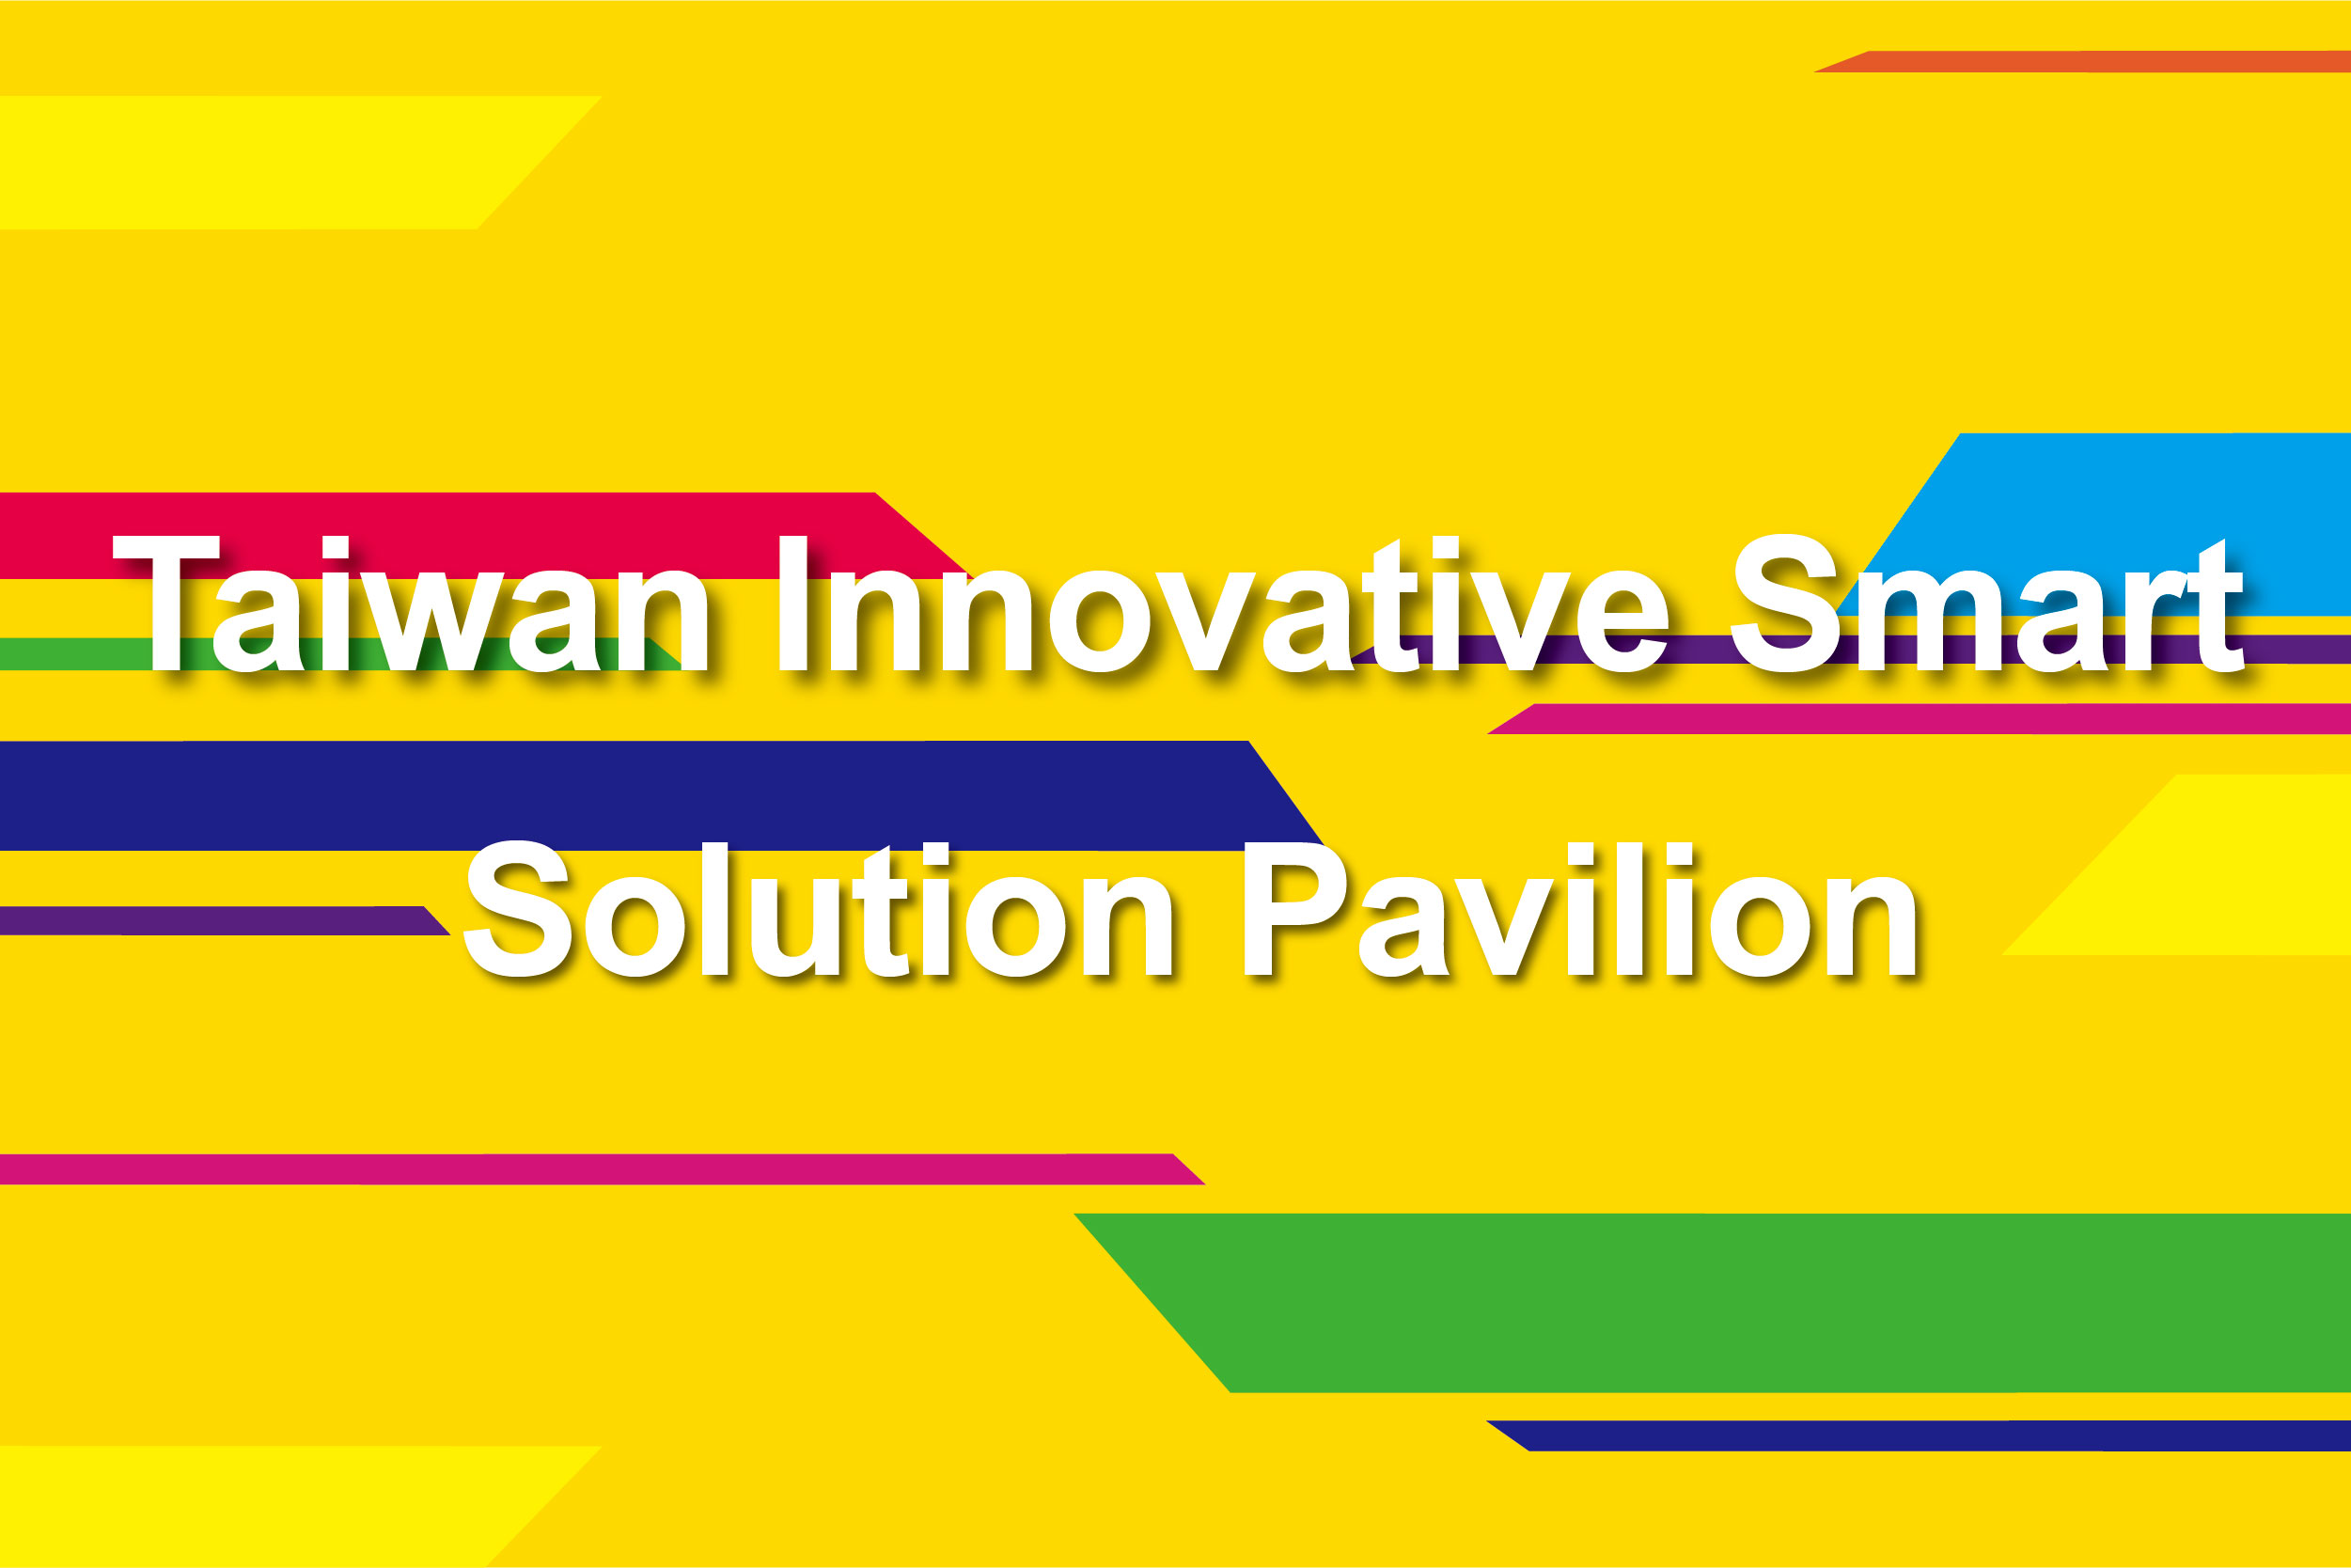 Taiwan Innovative Smart Solution Pavilion